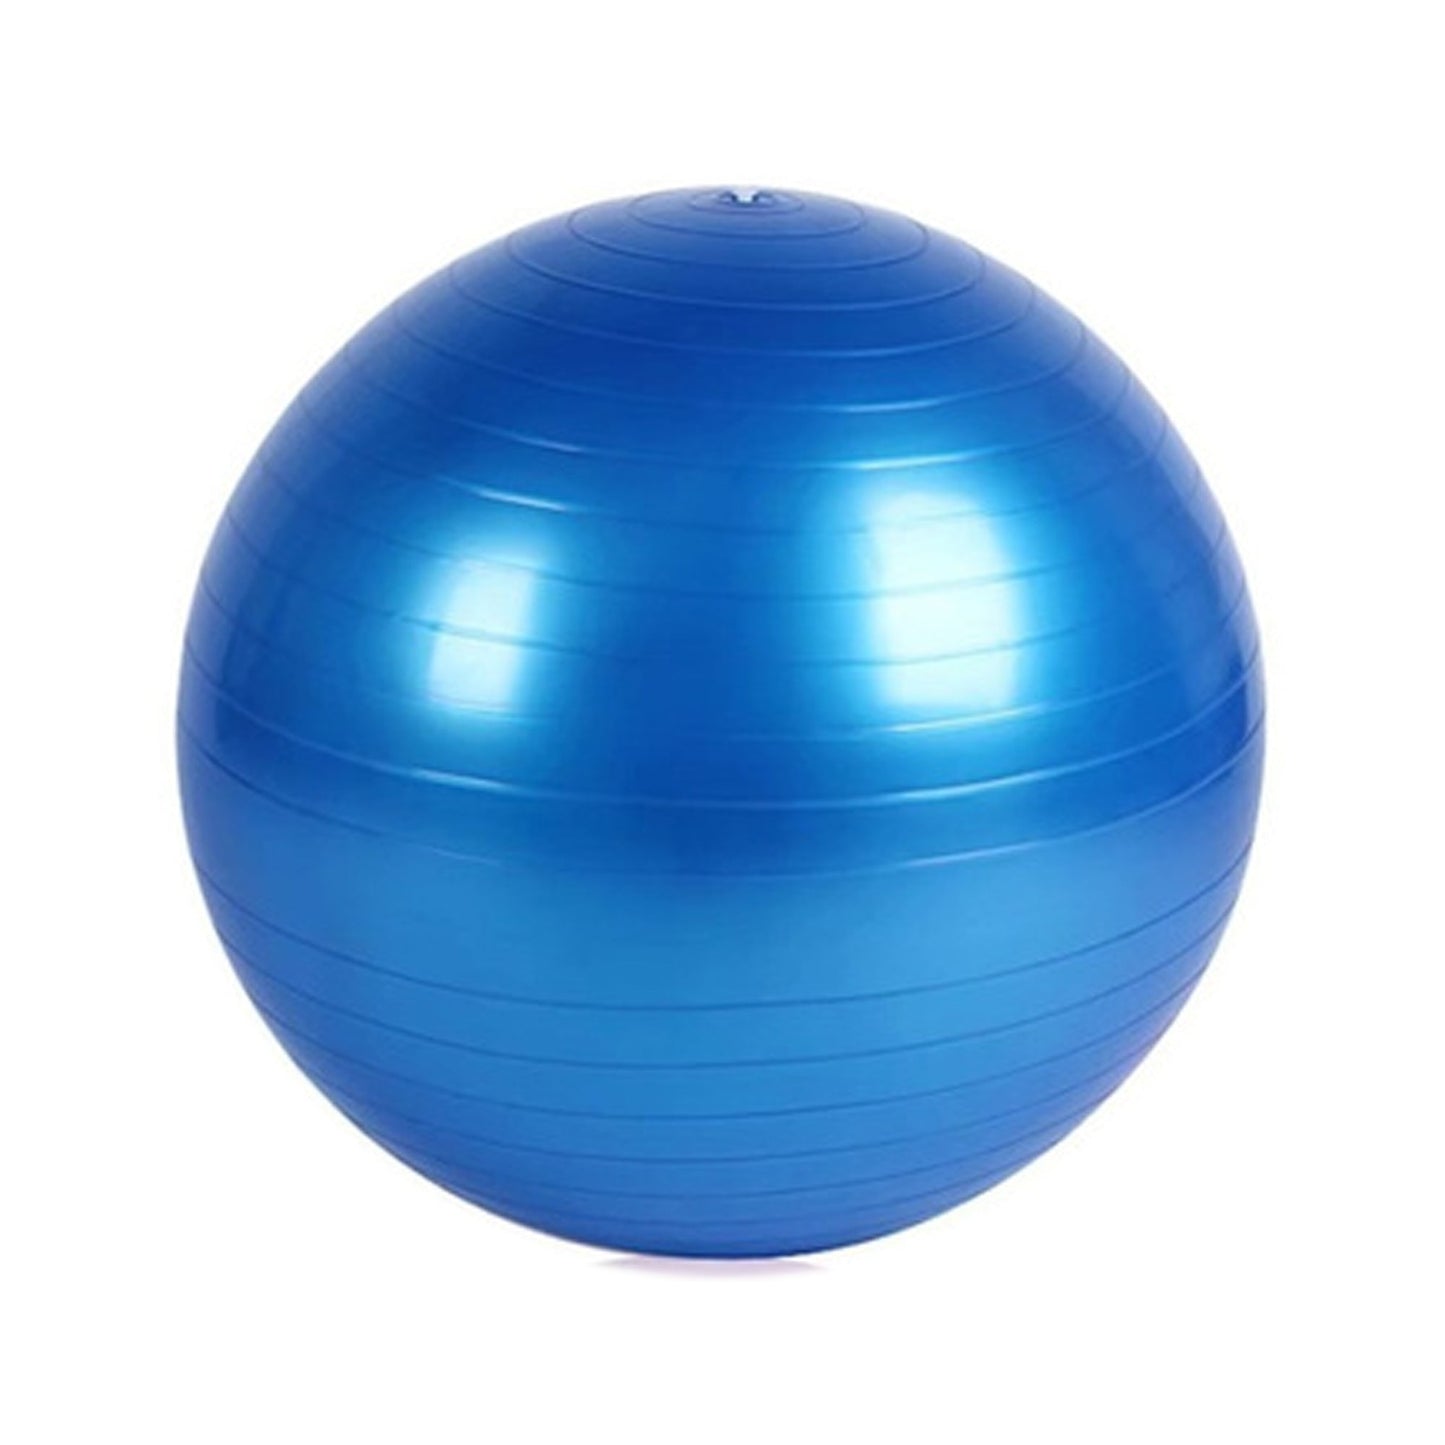 Anti-Burst Exercise Heavy Duty Gym Ball (Multicolour) (75Cm)